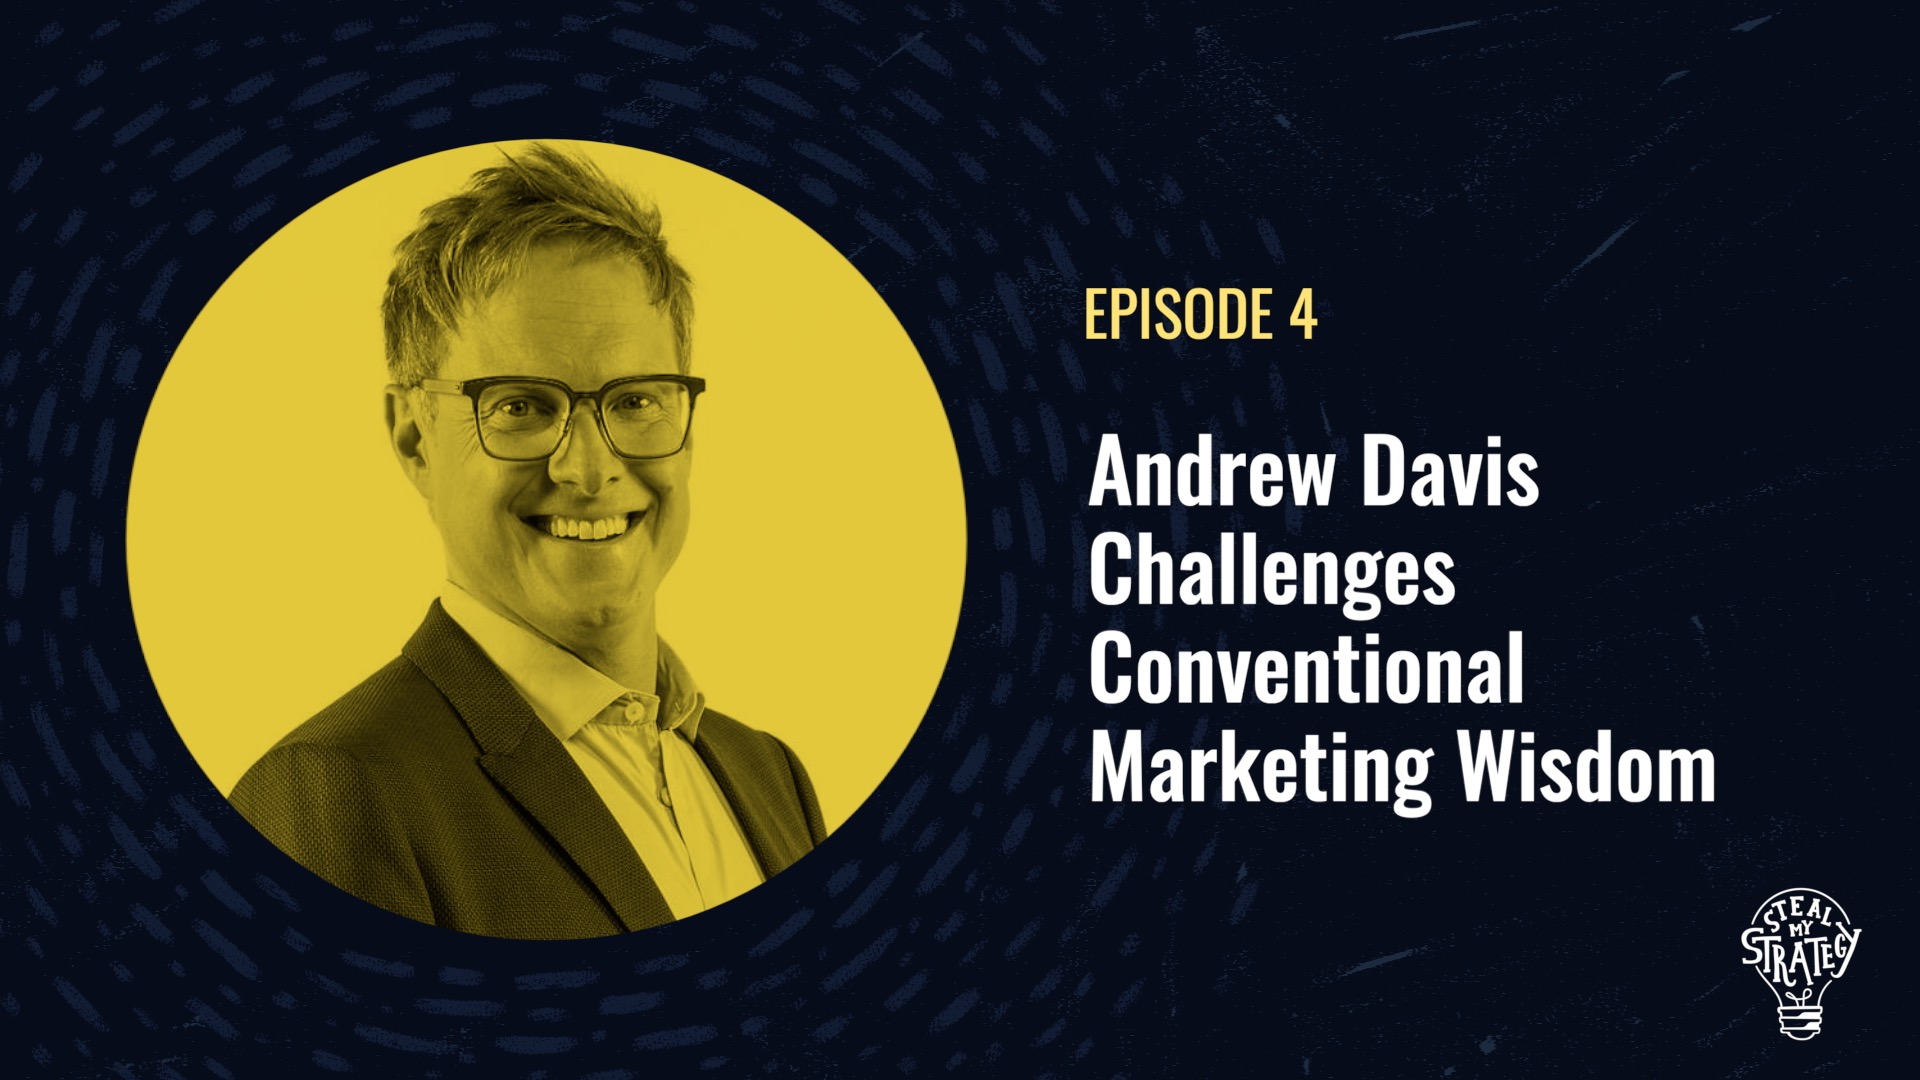 Andrew Davis Challenges Conventional Marketing Wisdom